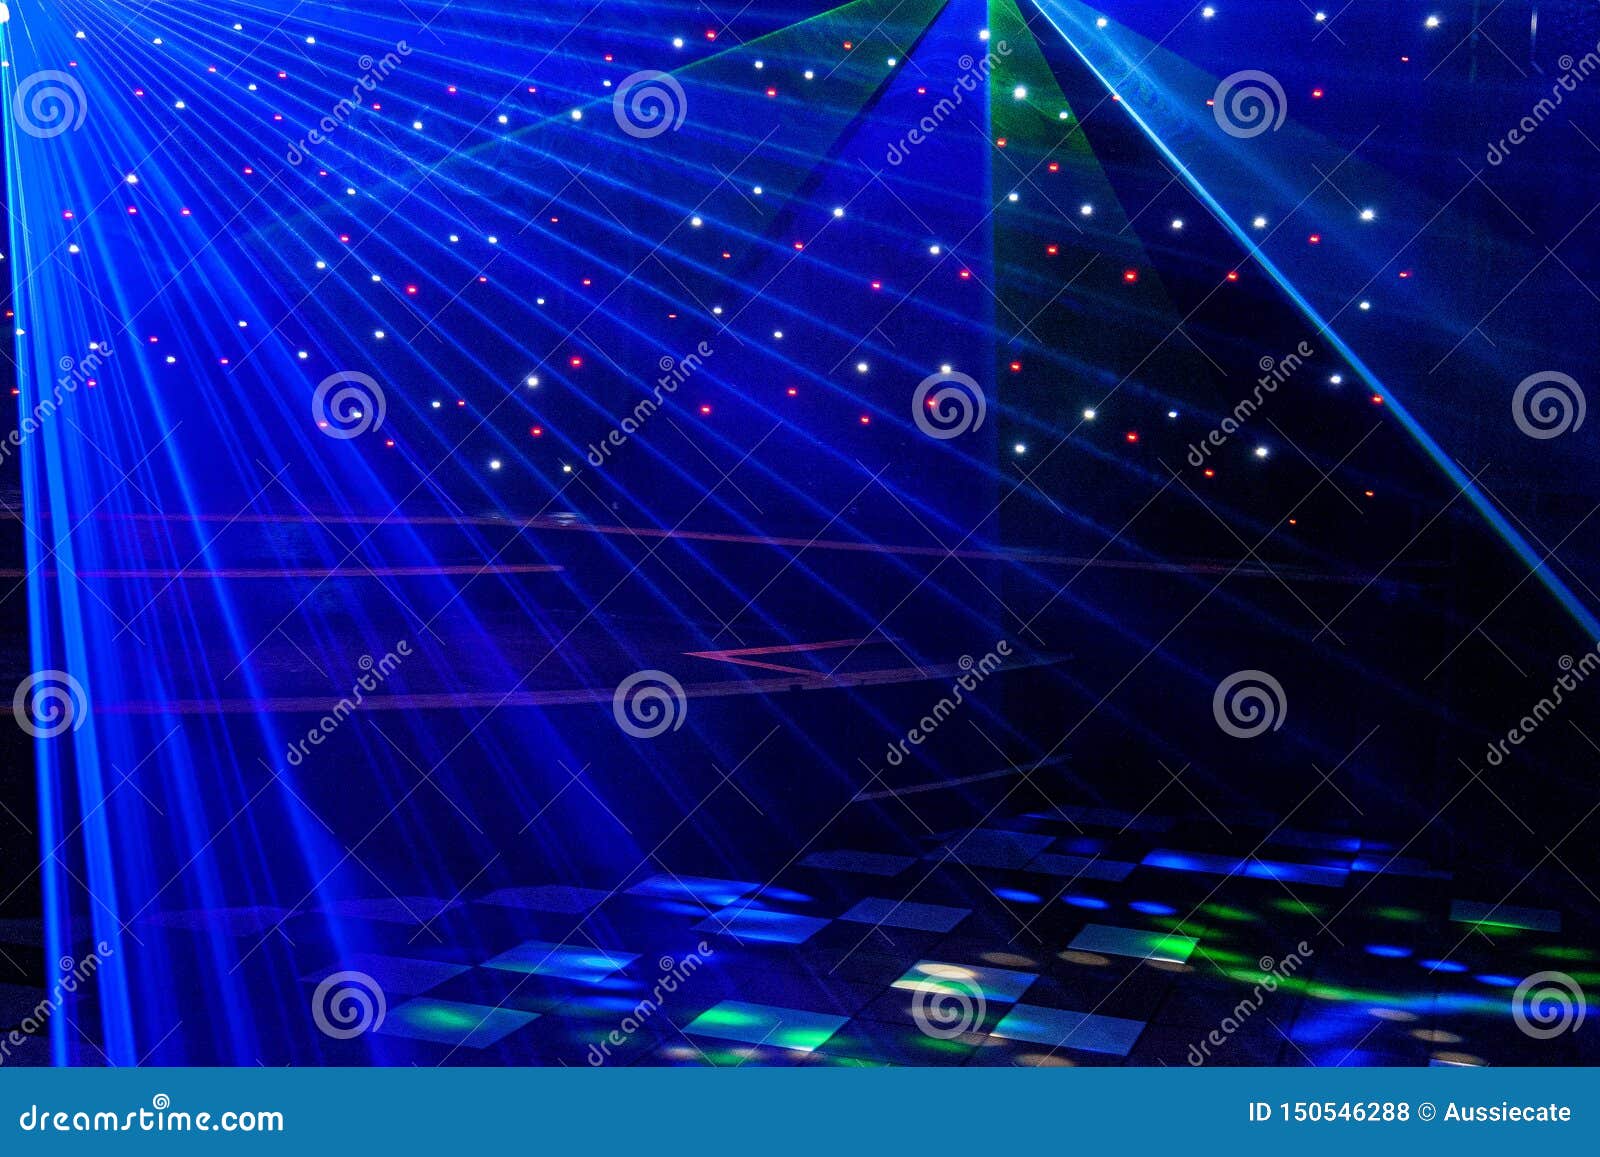 bright nightclub purple, white, blue laser lights cutting through smoke machine smoke making light and rainbow patterns